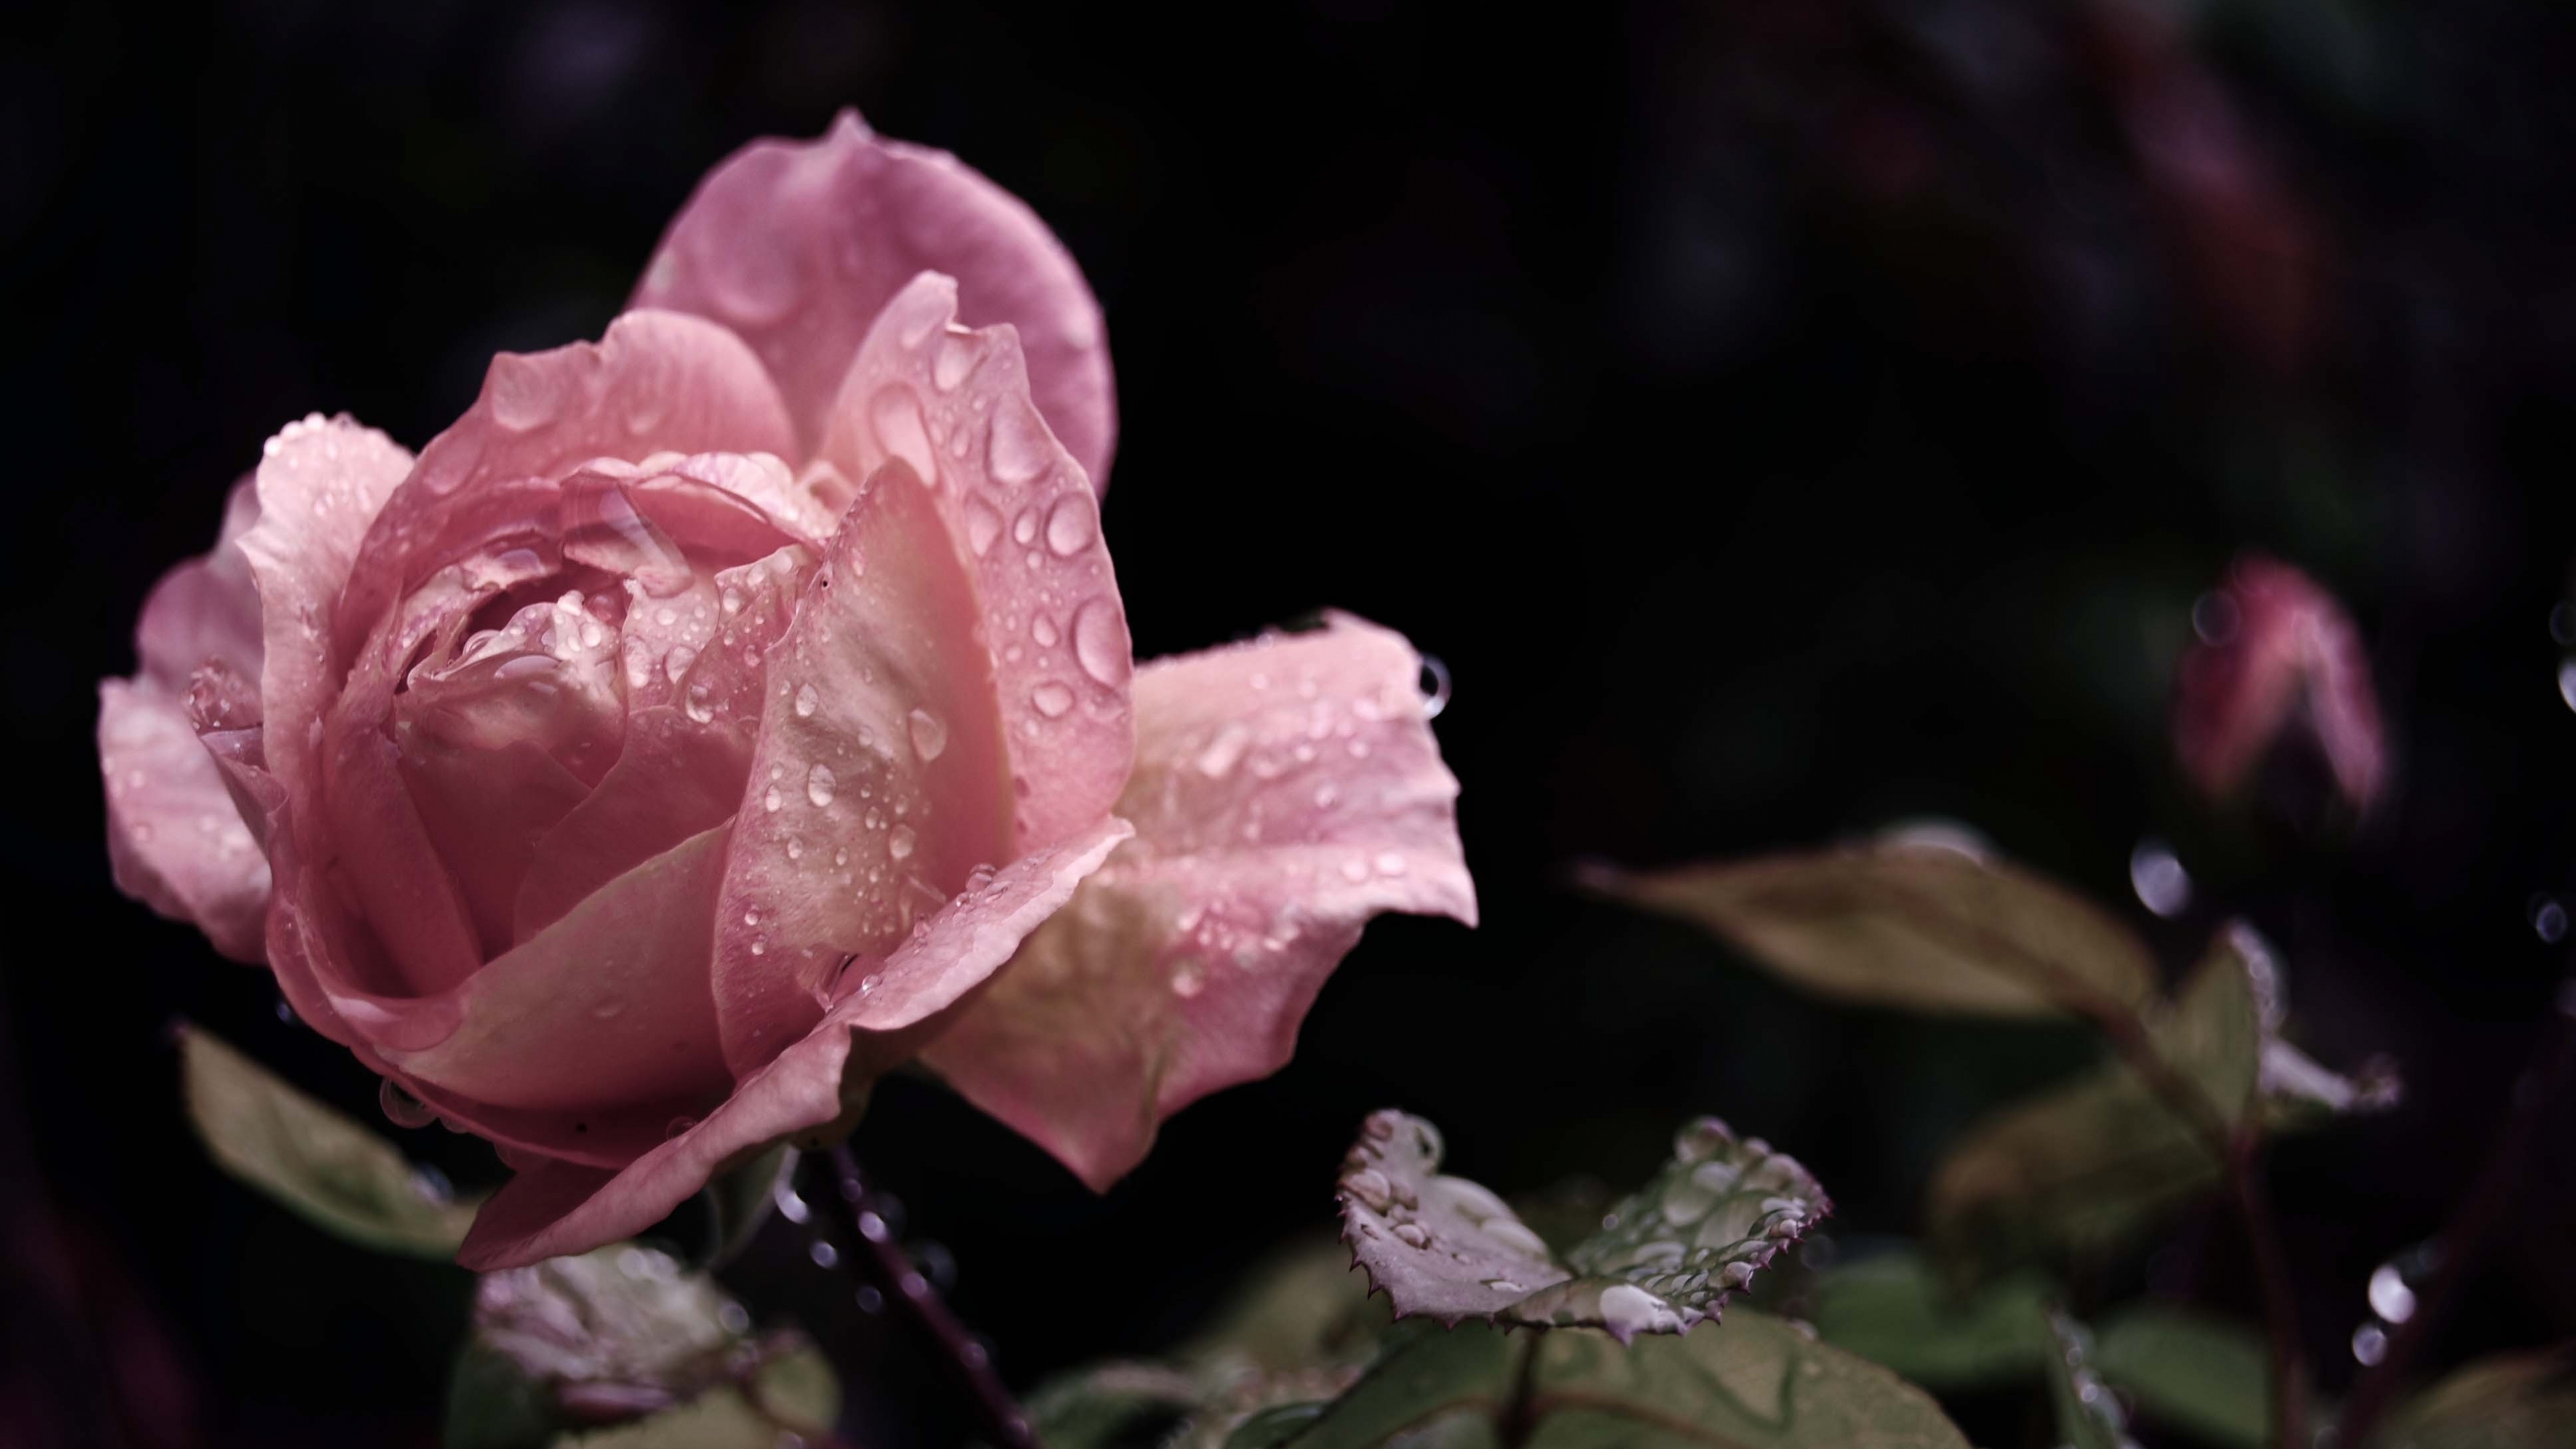 Rose Rose en Fleurs Pendant la Journée. Wallpaper in 3840x2160 Resolution